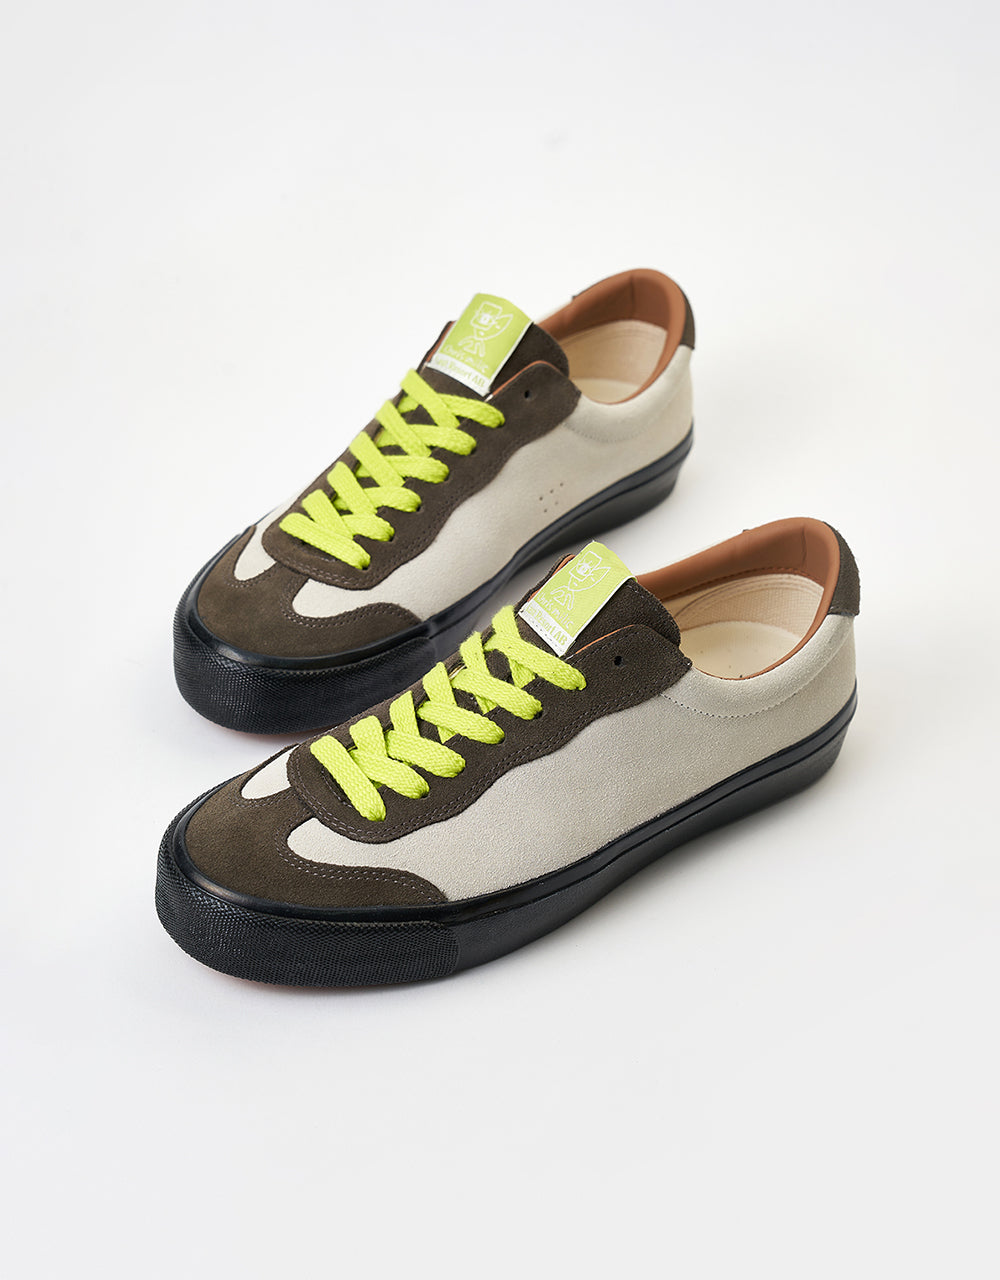 Last Resort AB VM004 Milic Lo Skate Shoes - Olive Cream/Black